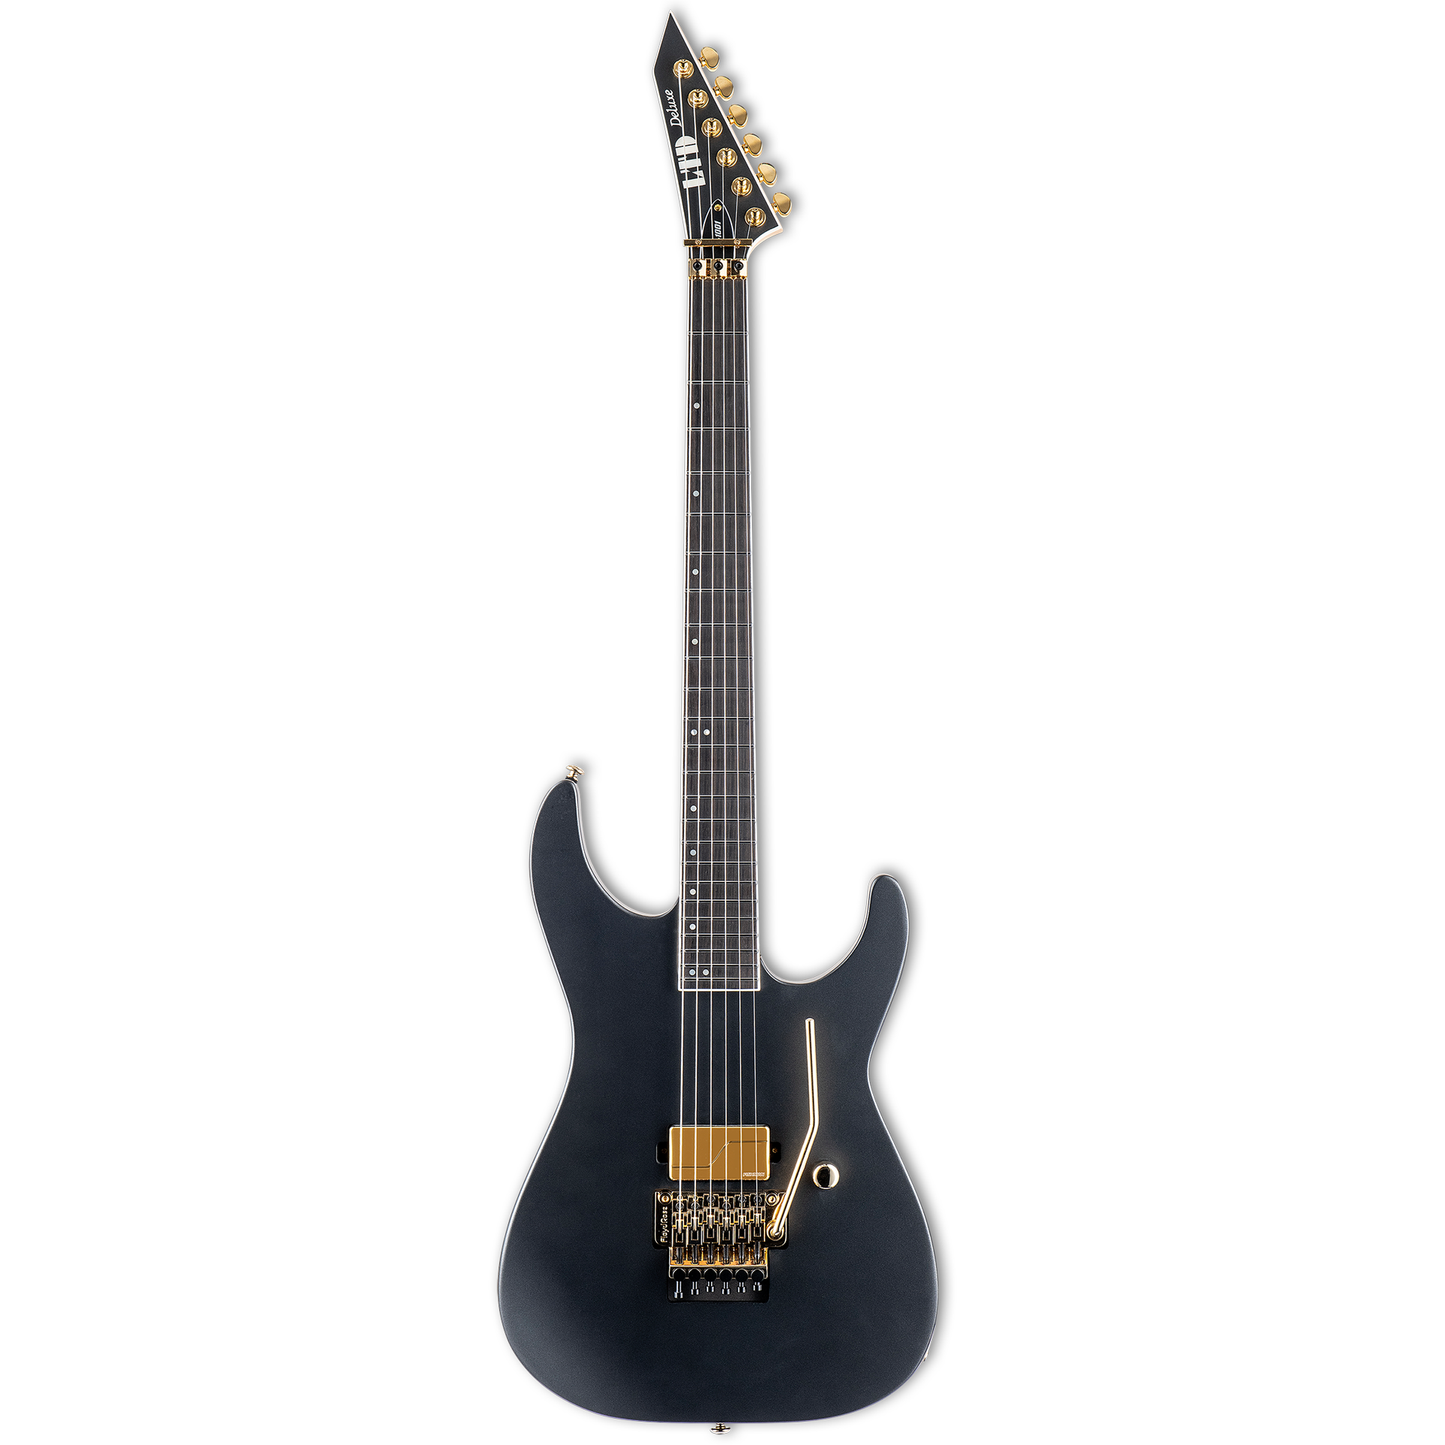 ESP LTD M-1001 Electric Guitar - Charcoal Metallic Satin